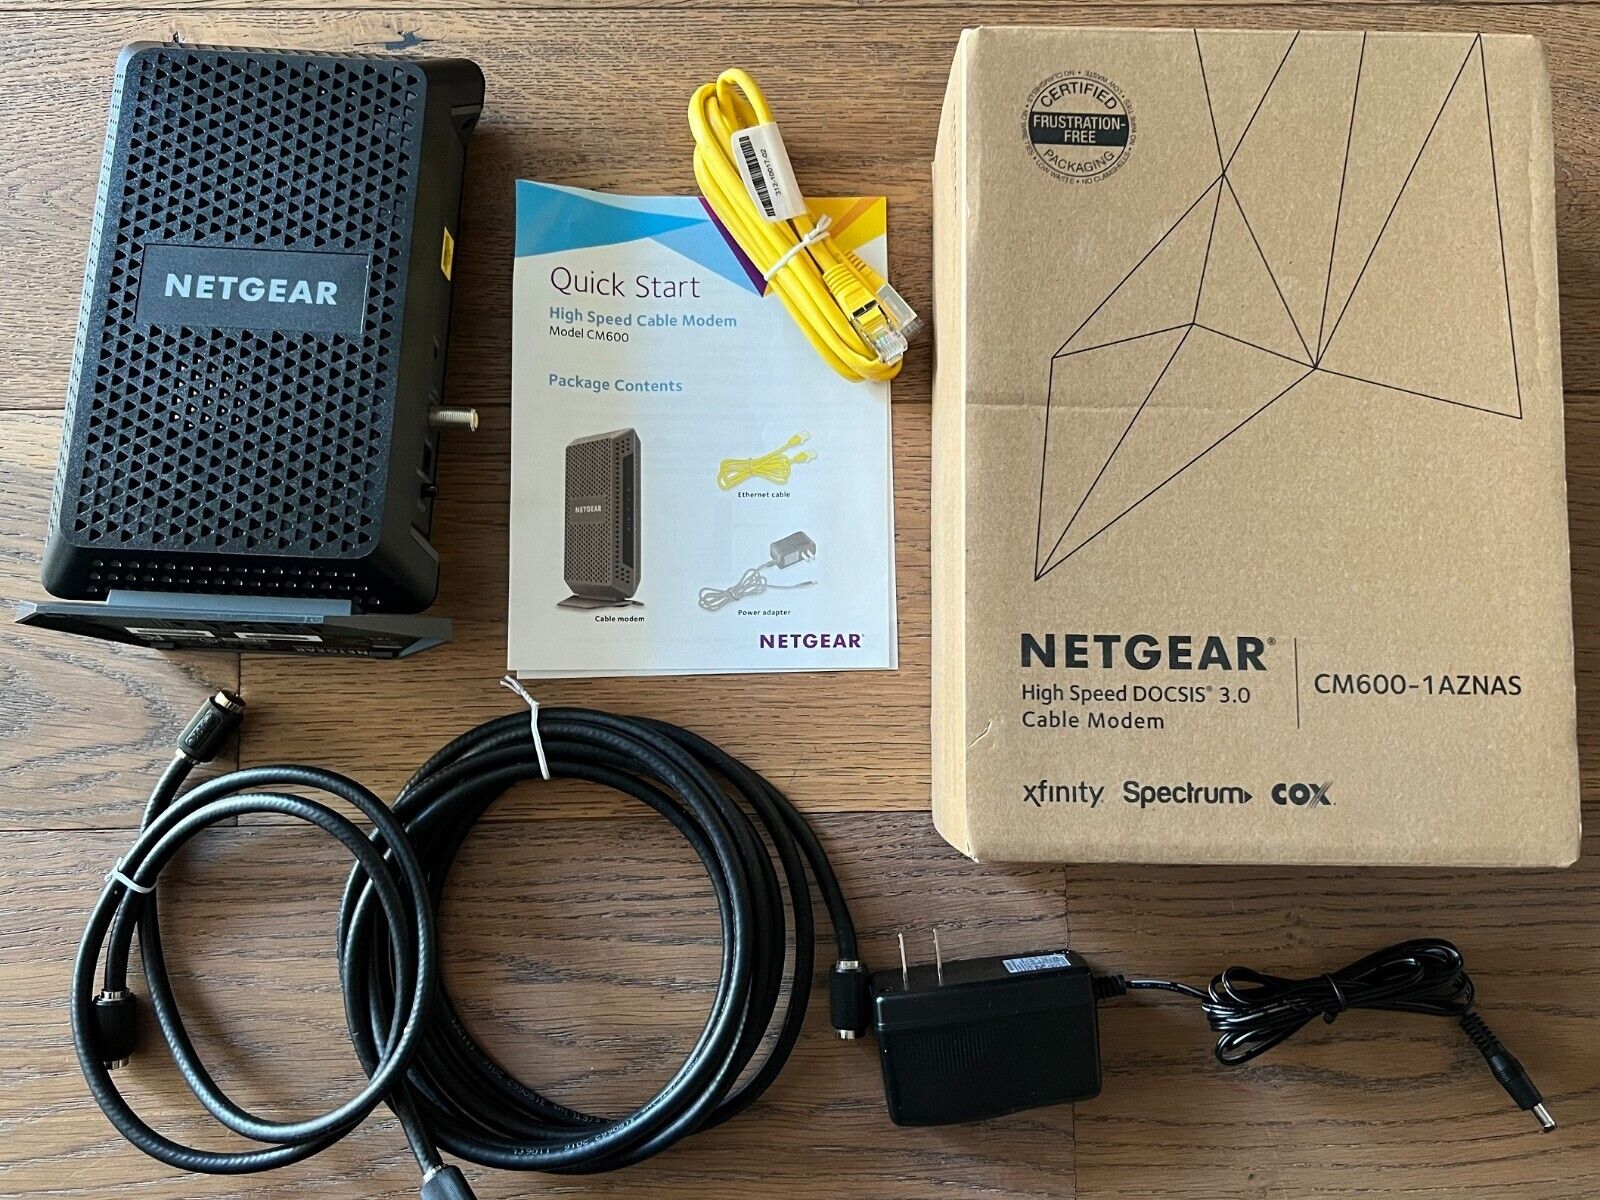 NETGEAR - CM600 CABLE MODEM - DOCSIS 3.0 - Spectrum Comcast/Xfinity COX - NICE